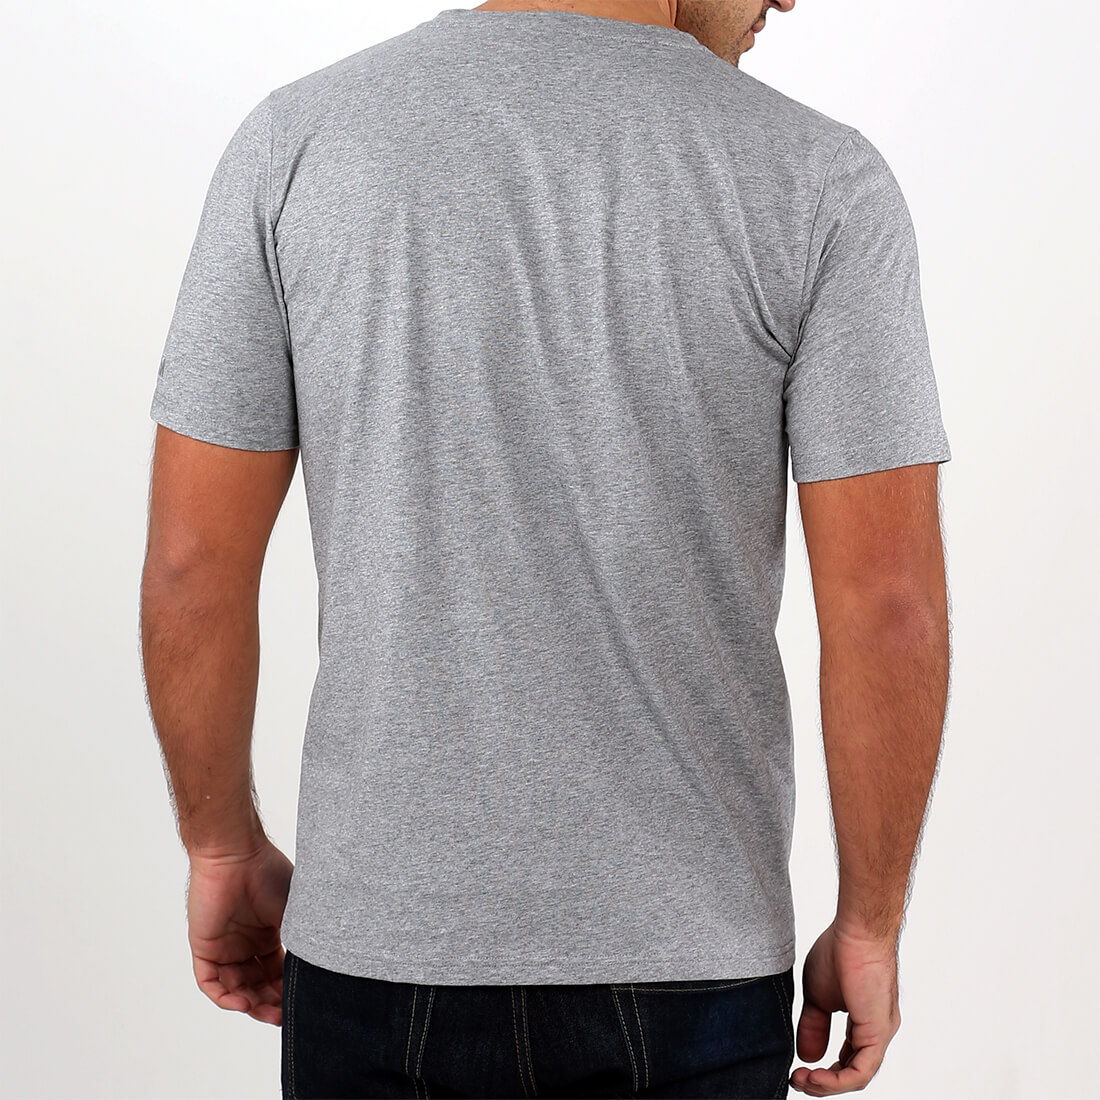 Men's Grey T-shirt | Melange Grey Cotton T-shirts | Retro Red